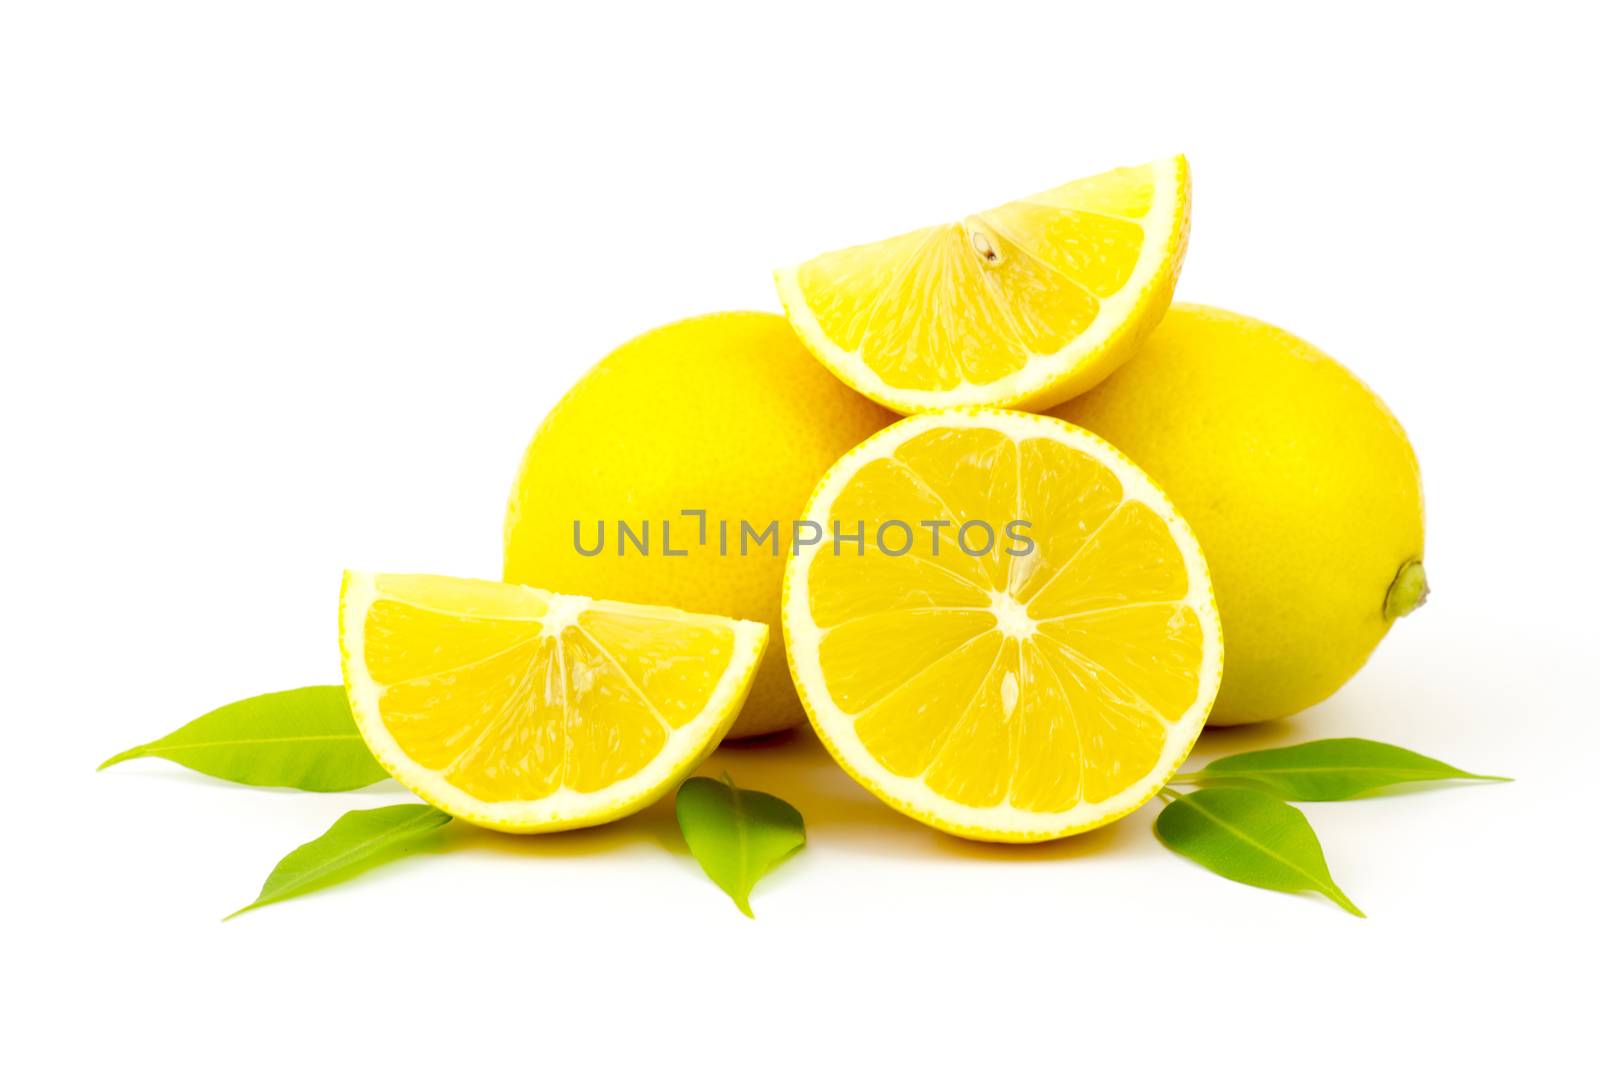 fresh lemons on white background